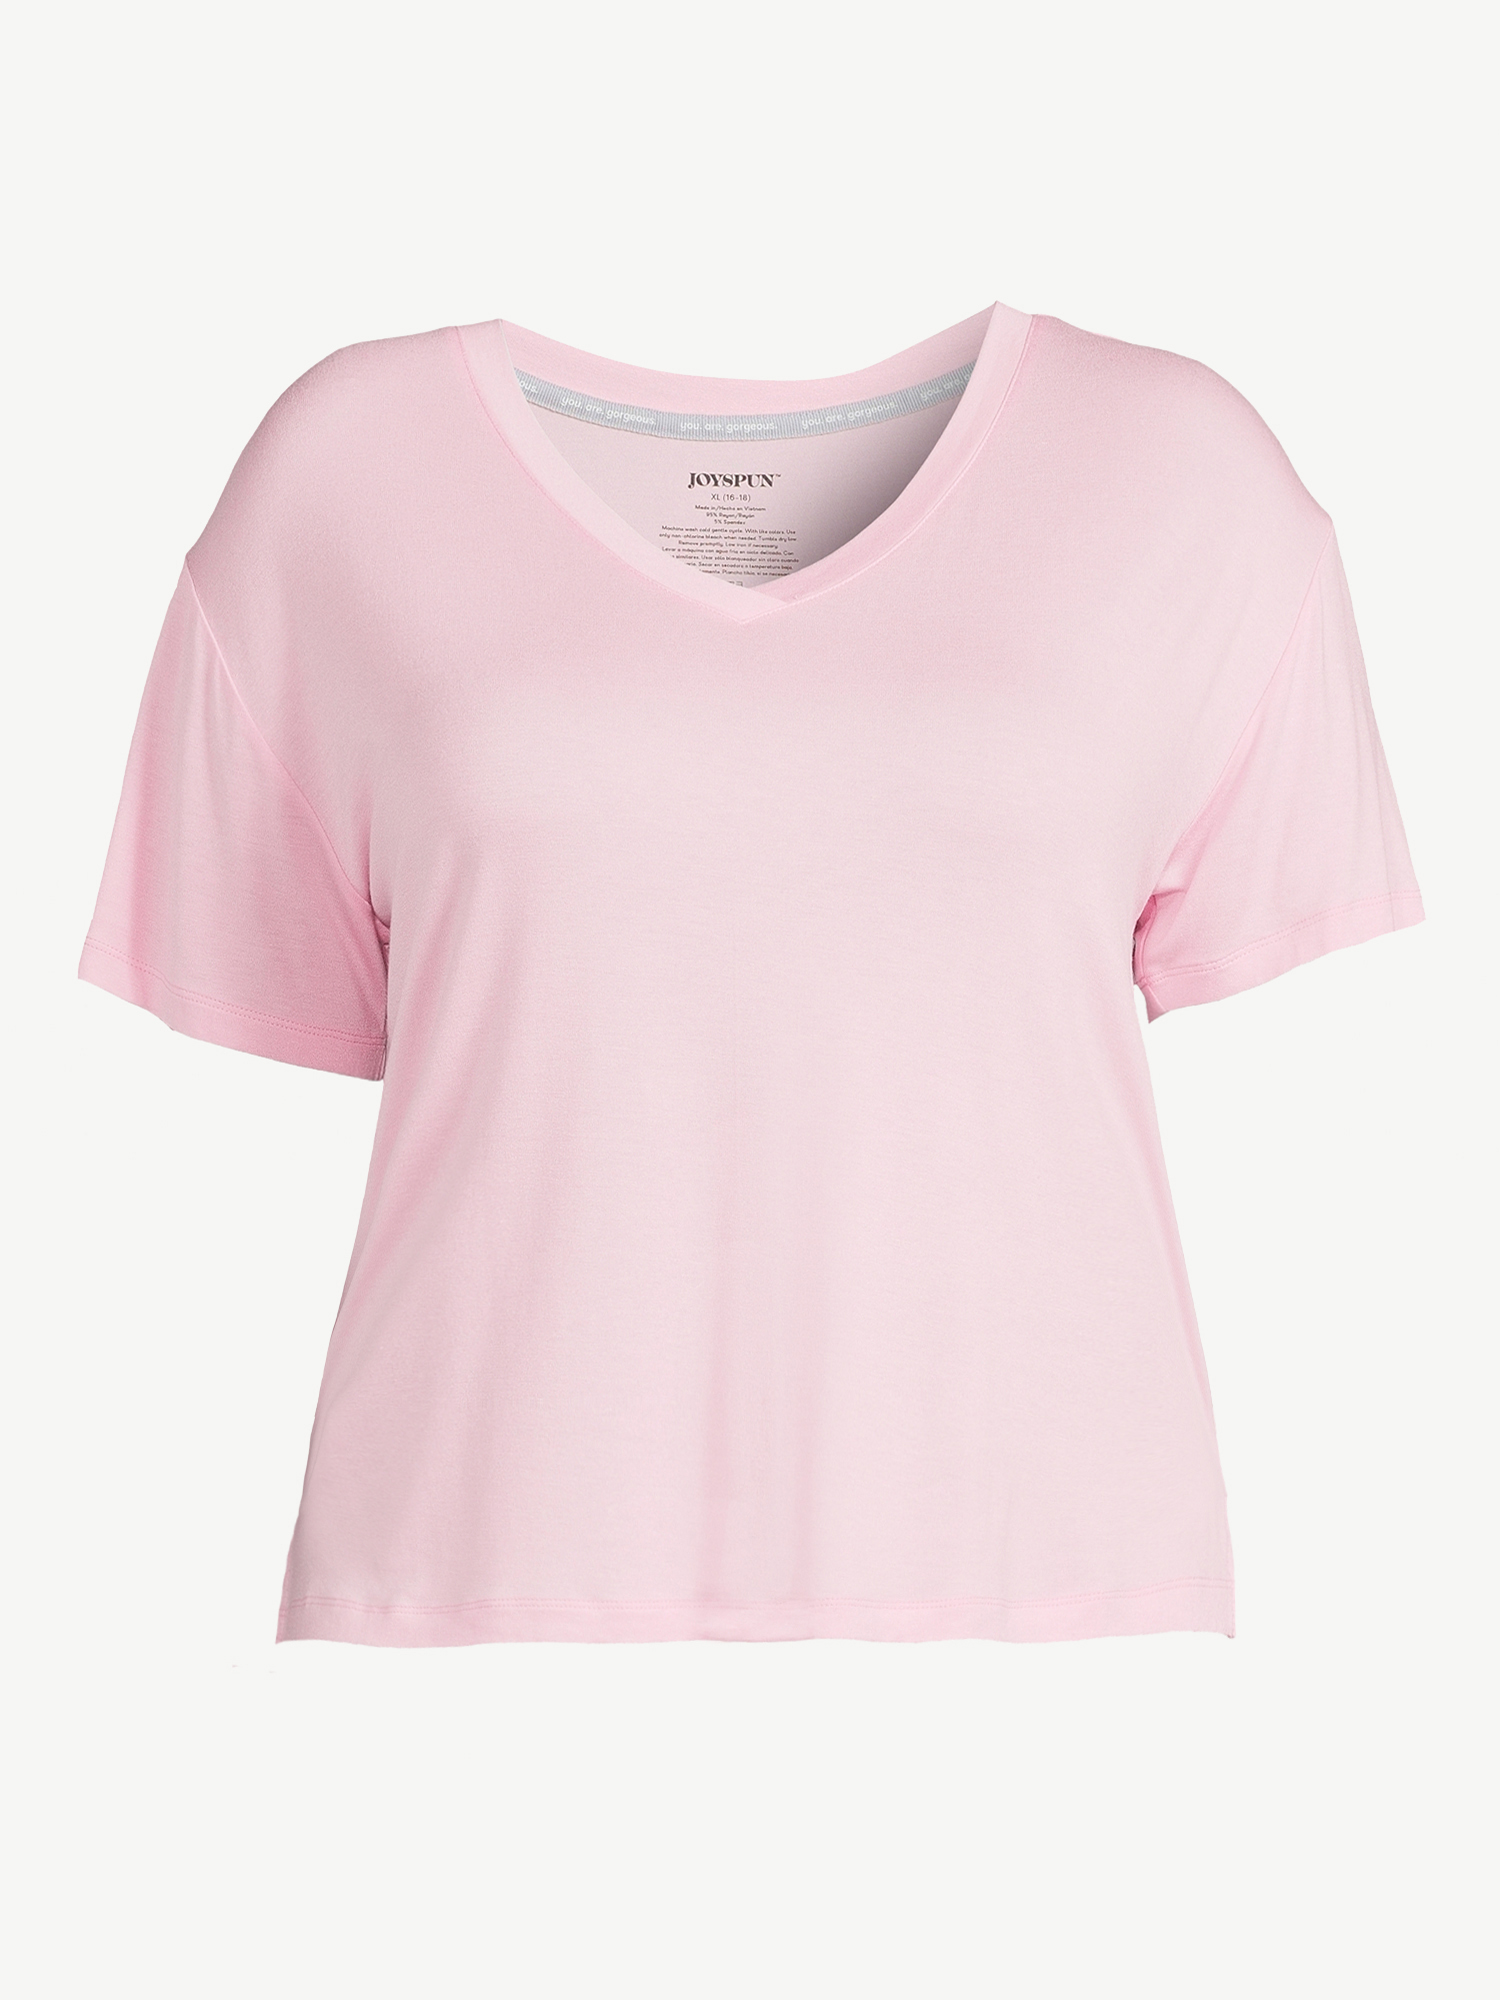 Joyspun Women's V-Neck Sleep T-Shirt, Sizes S to 3X - image 5 of 5